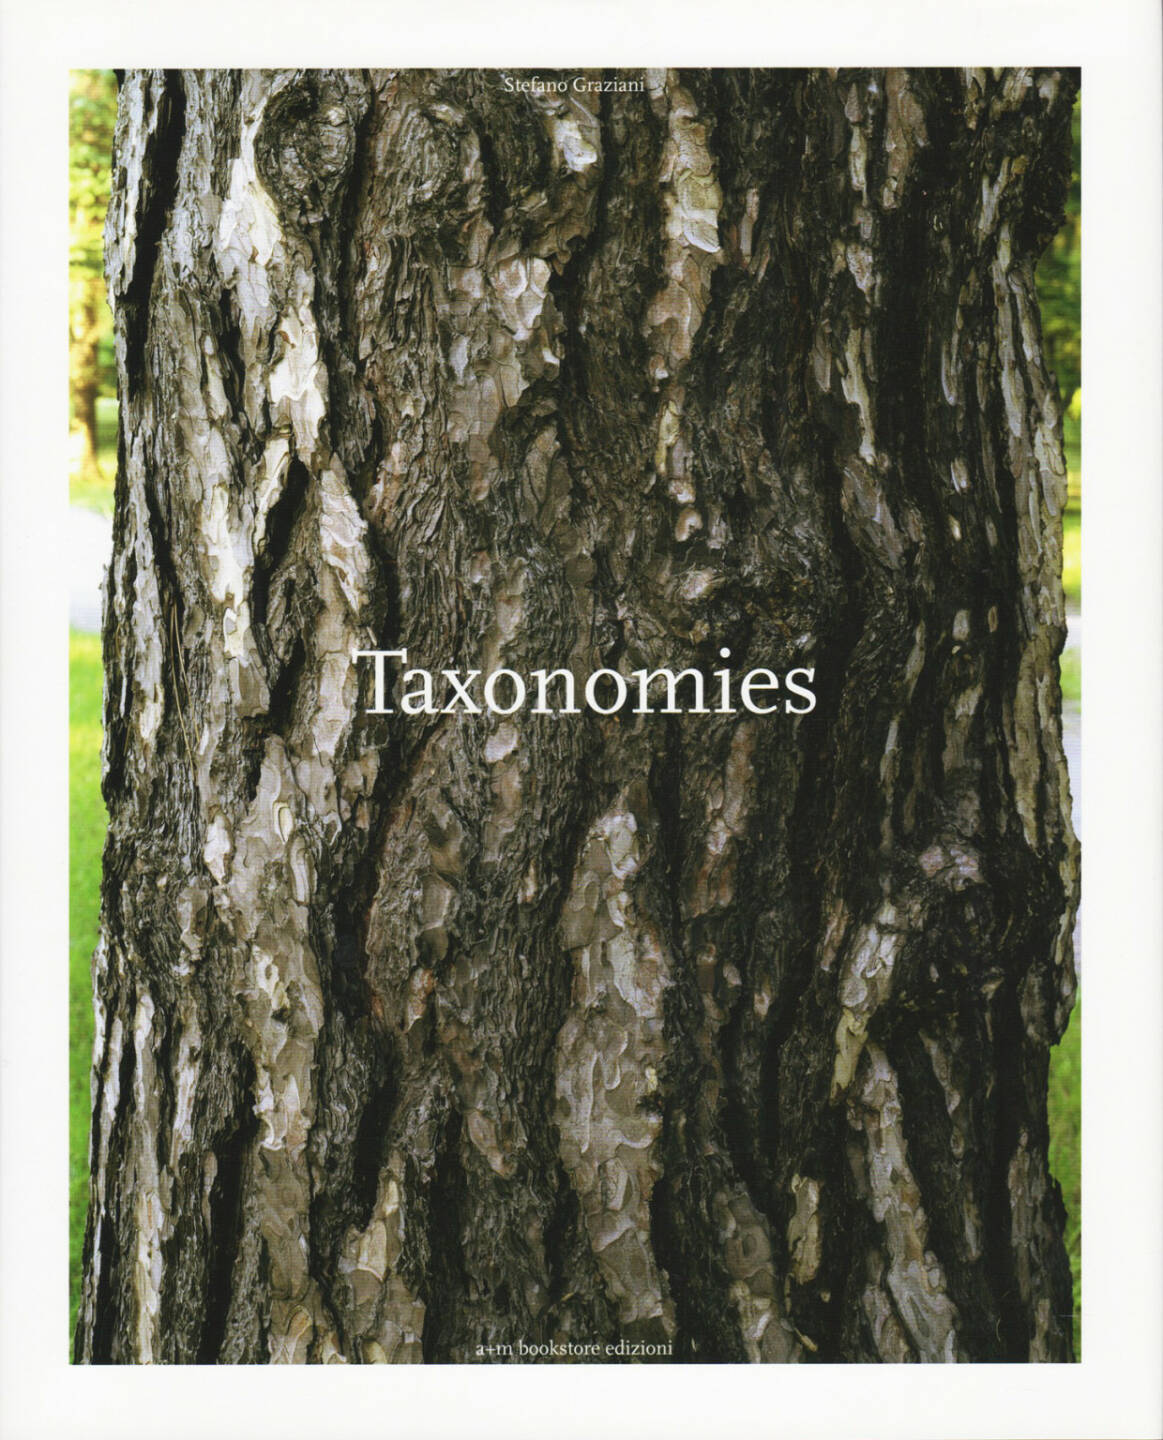 Stefano Graziani - Taxonomies, A & M Bookstore 2006, Cover - http://josefchladek.com/book/stefano_graziani_-_taxonomies